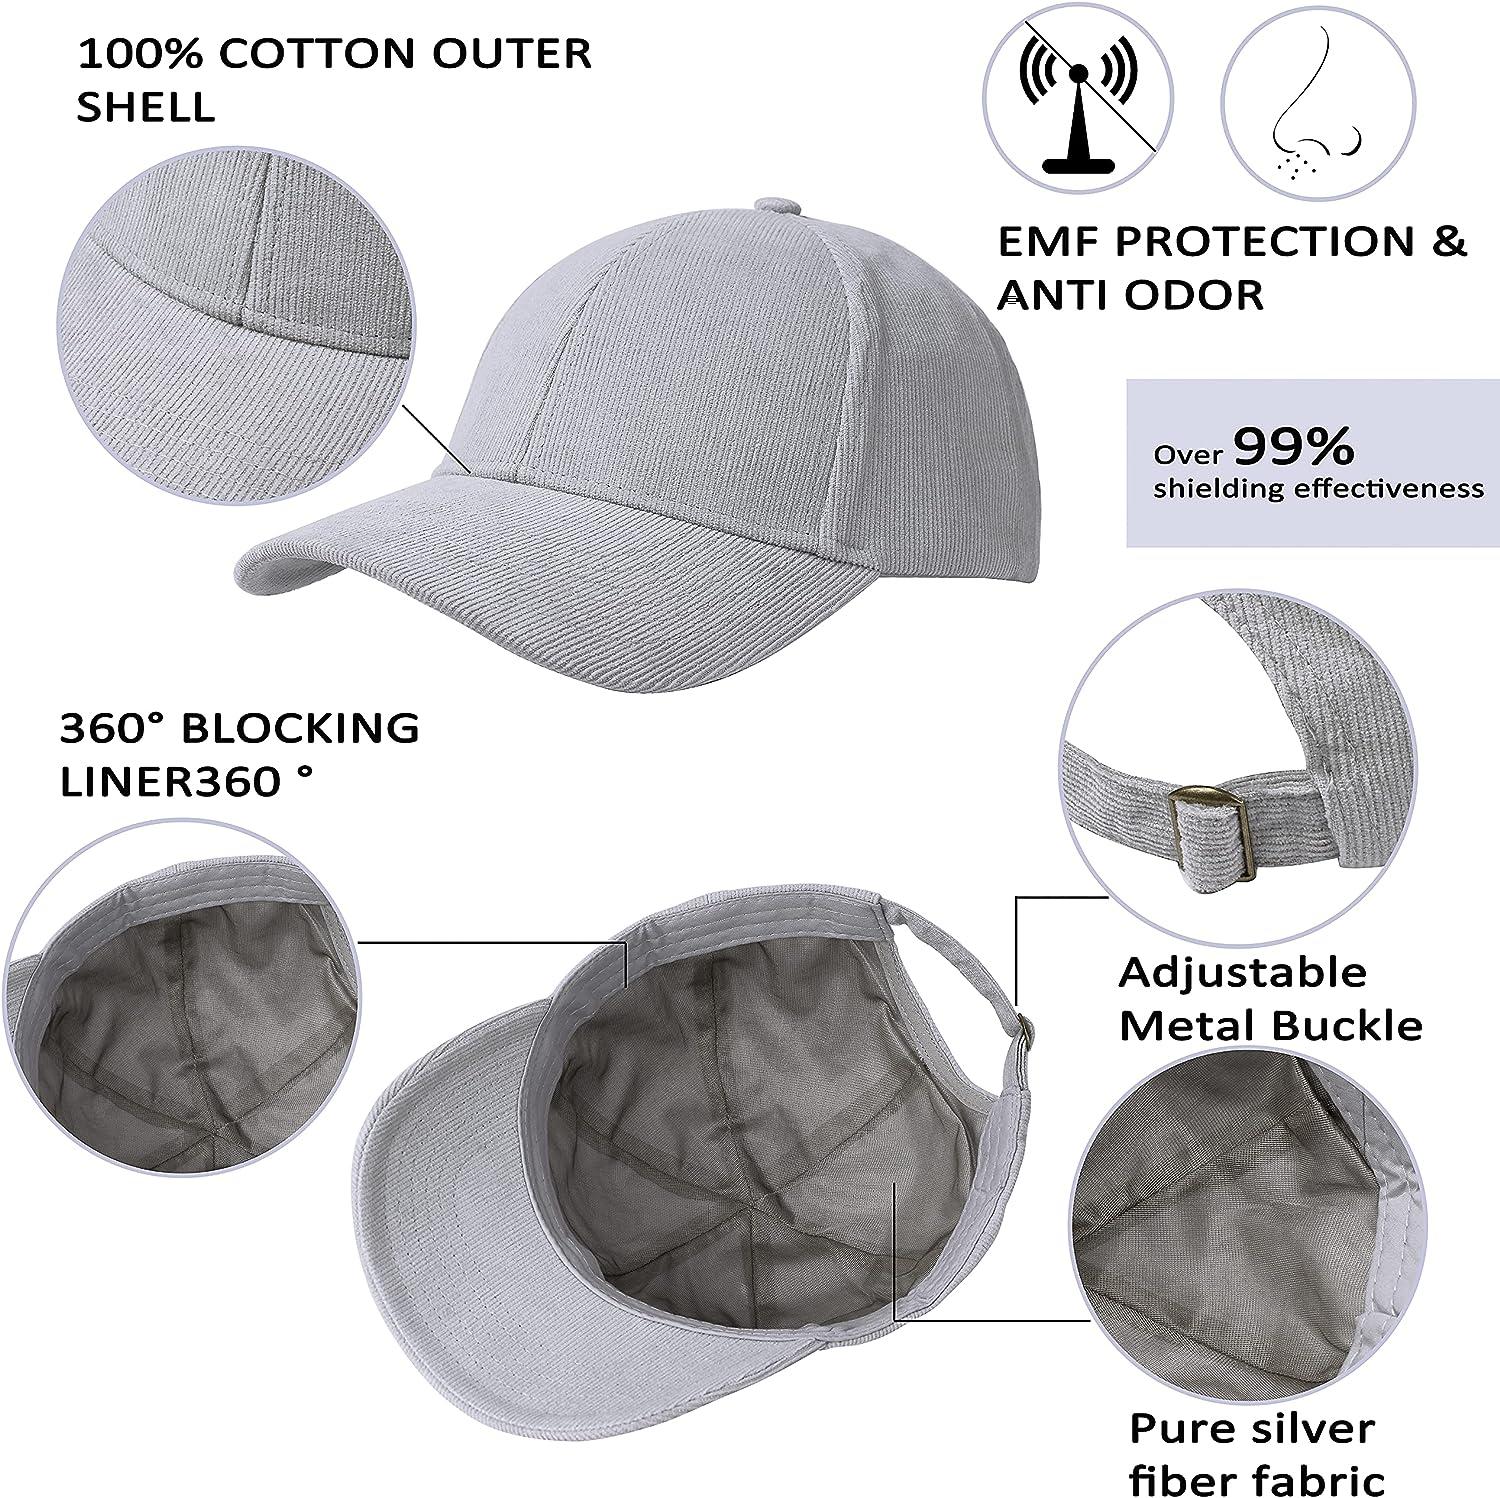 EMF Protection Hat - Blocking EMF Baseball Cap with Radiation